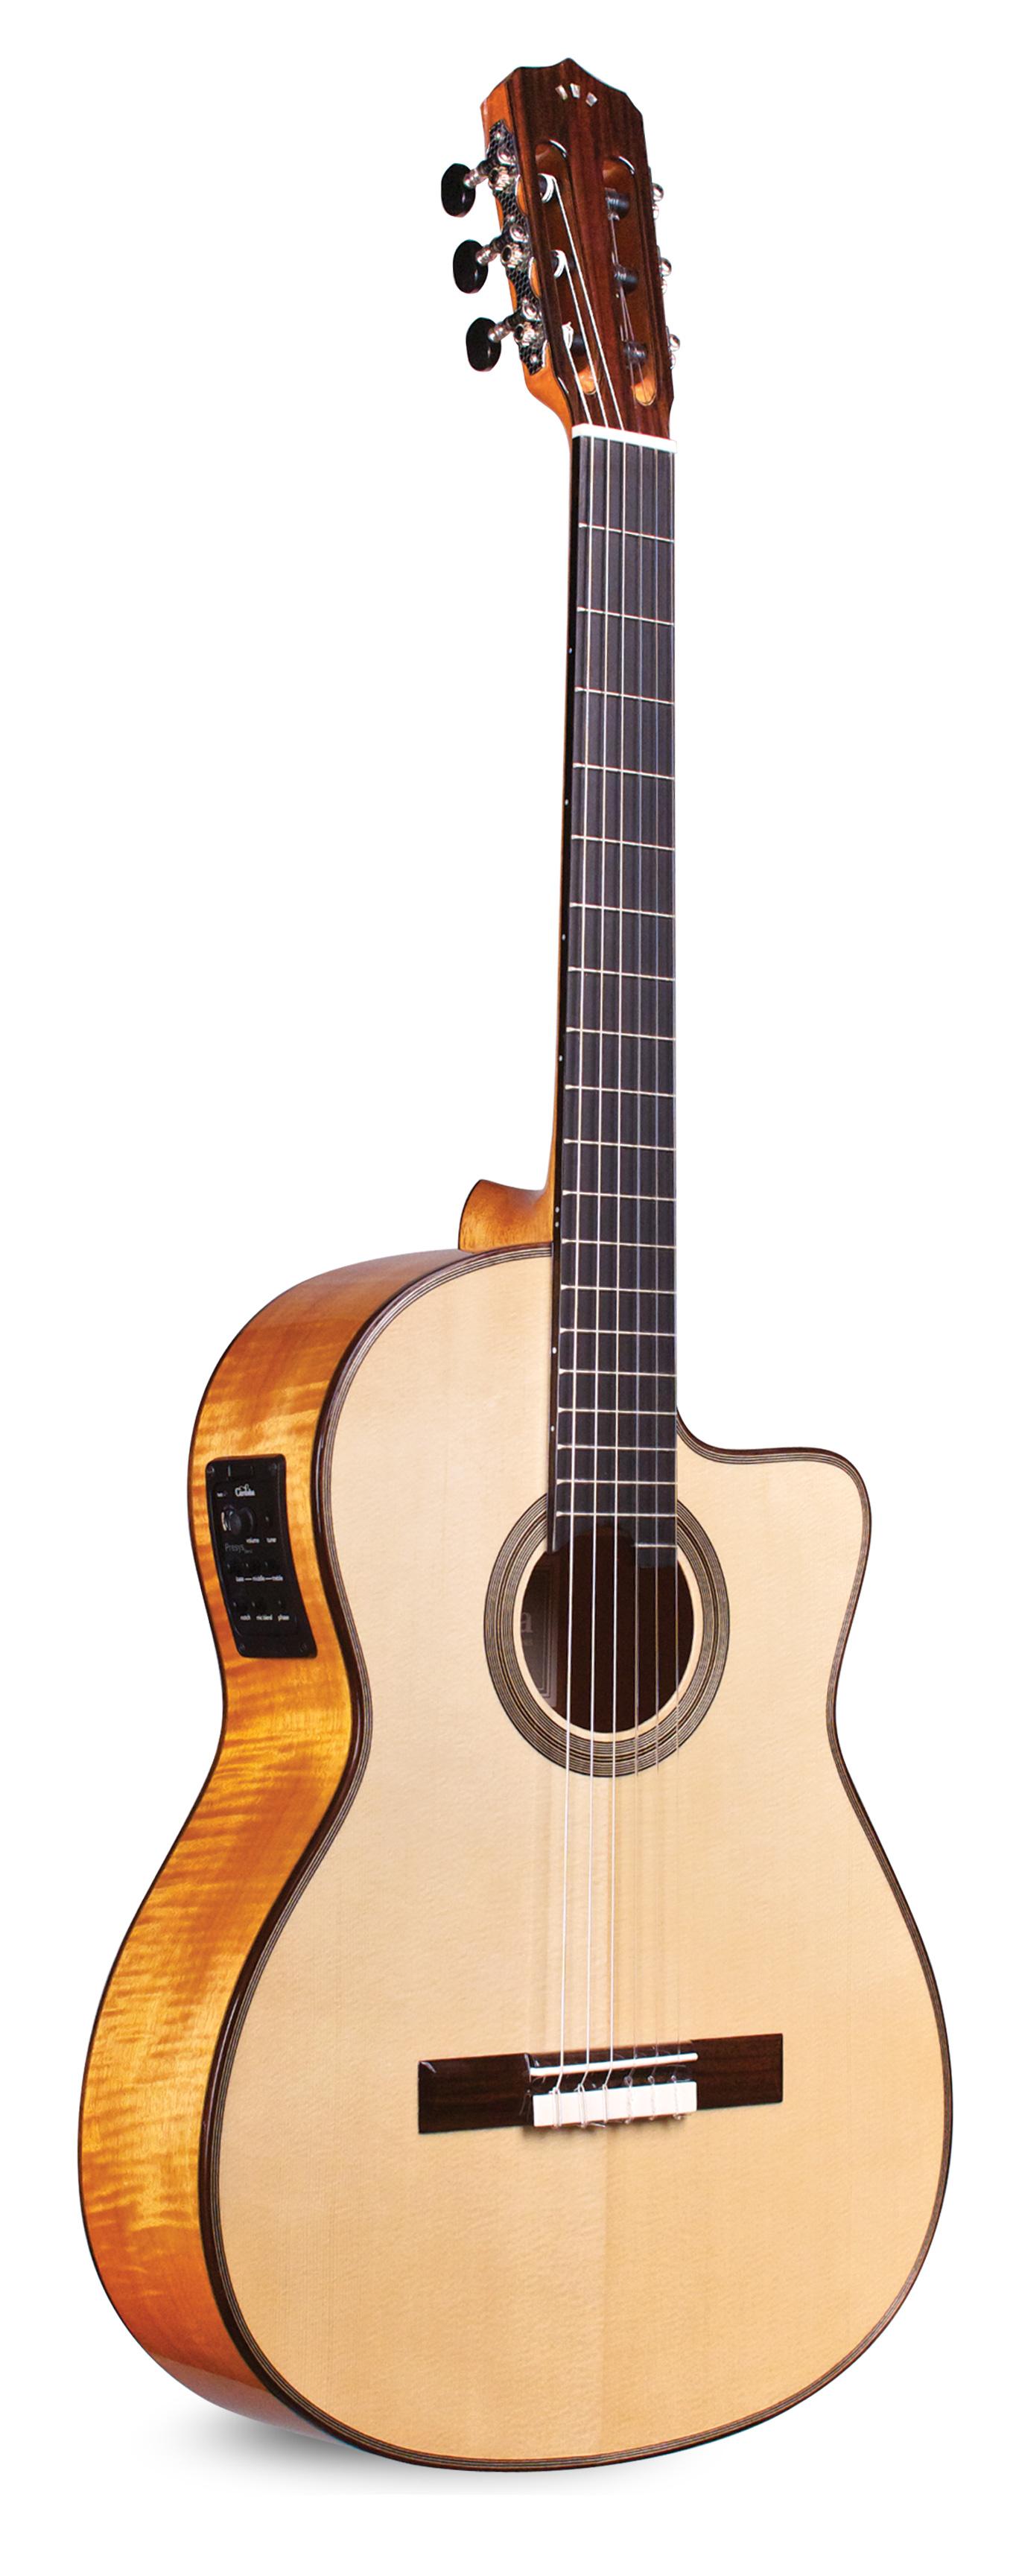 Cordoba Fusion 14 Maple - Natural - Classical guitar 4/4 size - Variation 2